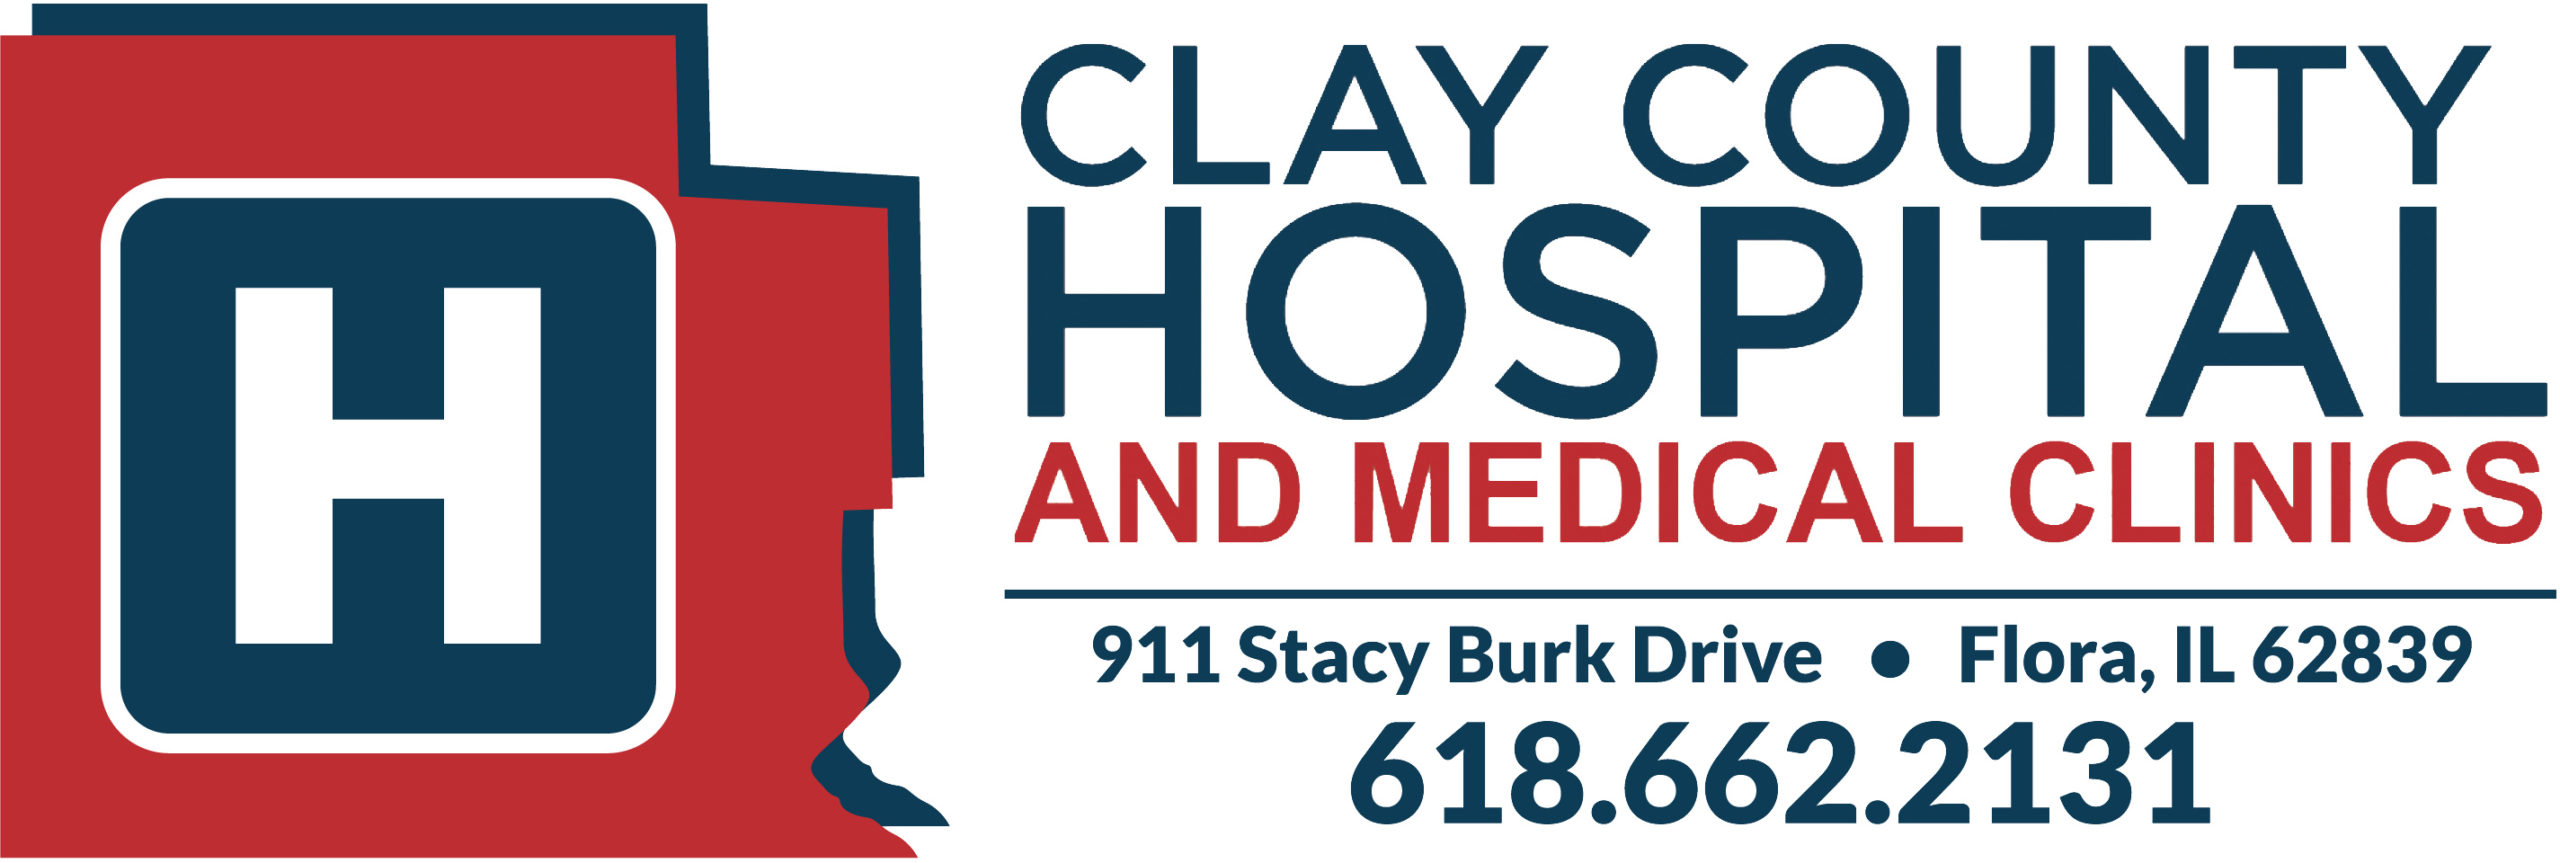 Clay County Hospital and Medical Clinics